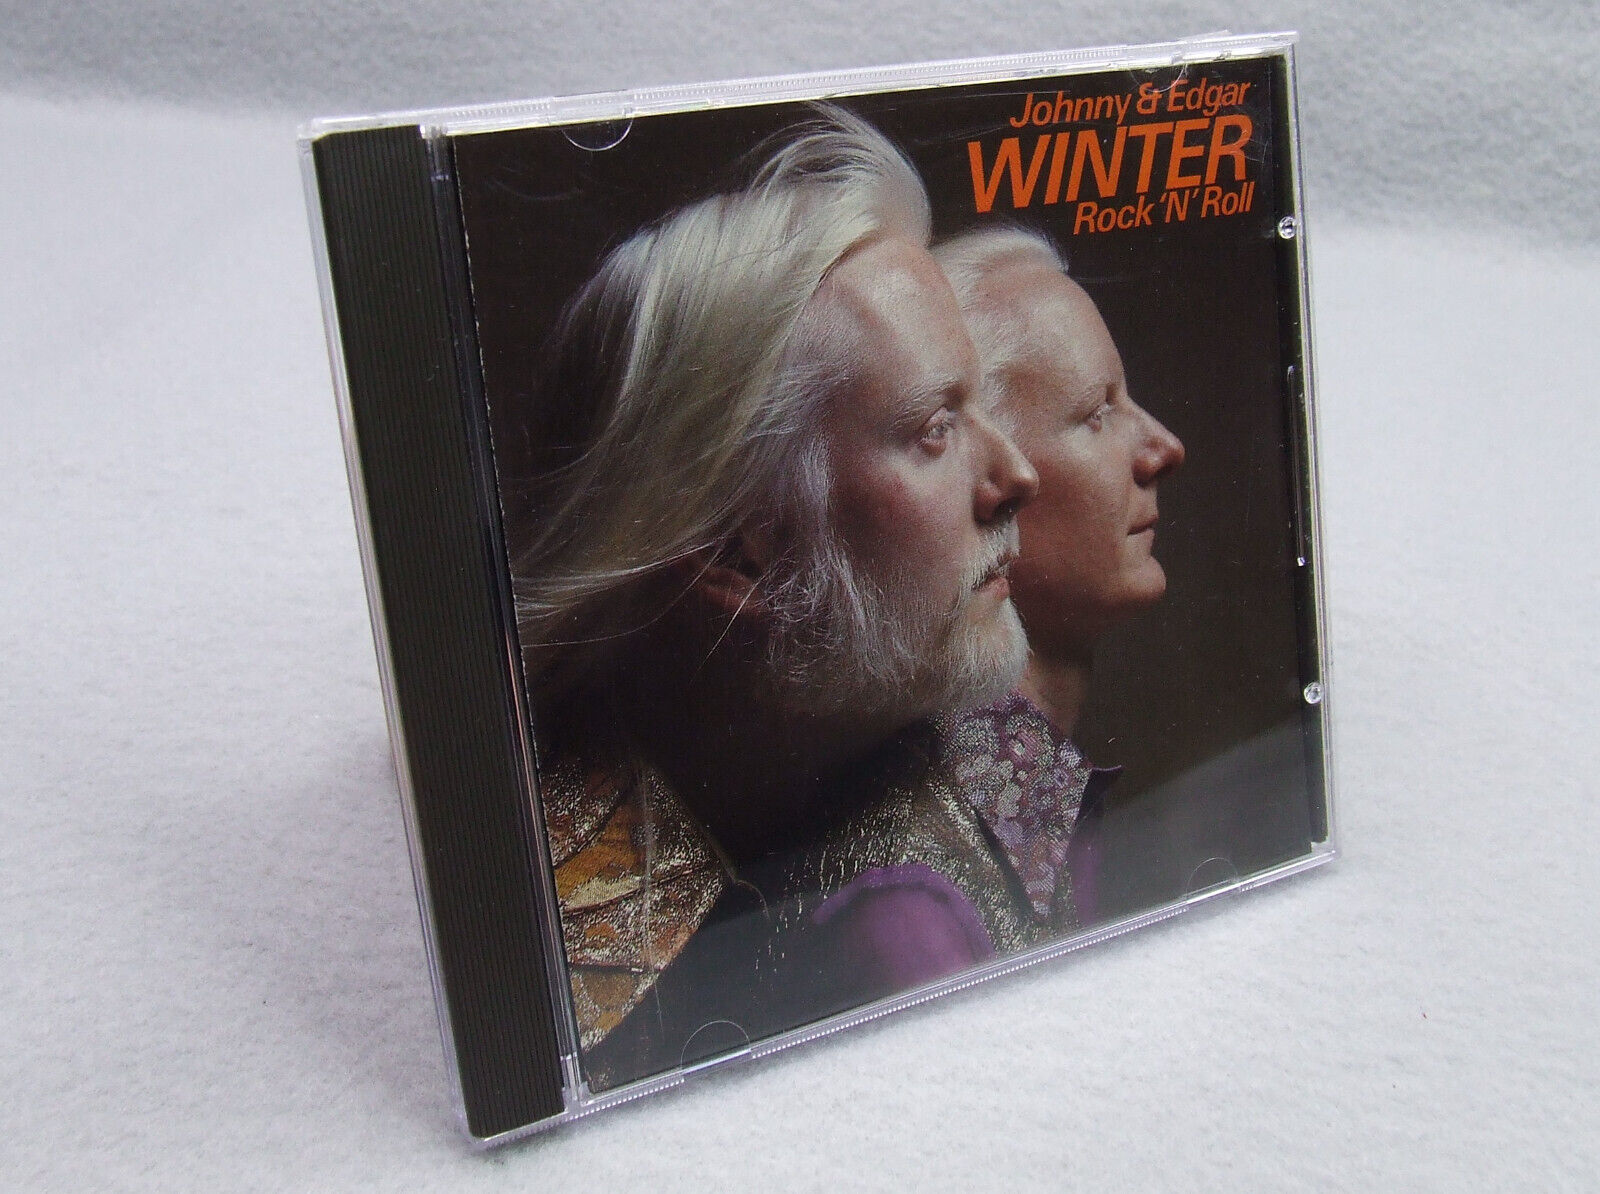 Johnny and Edgar Winter – Rock \'N\' Roll (CD, 1989 CBS Records)